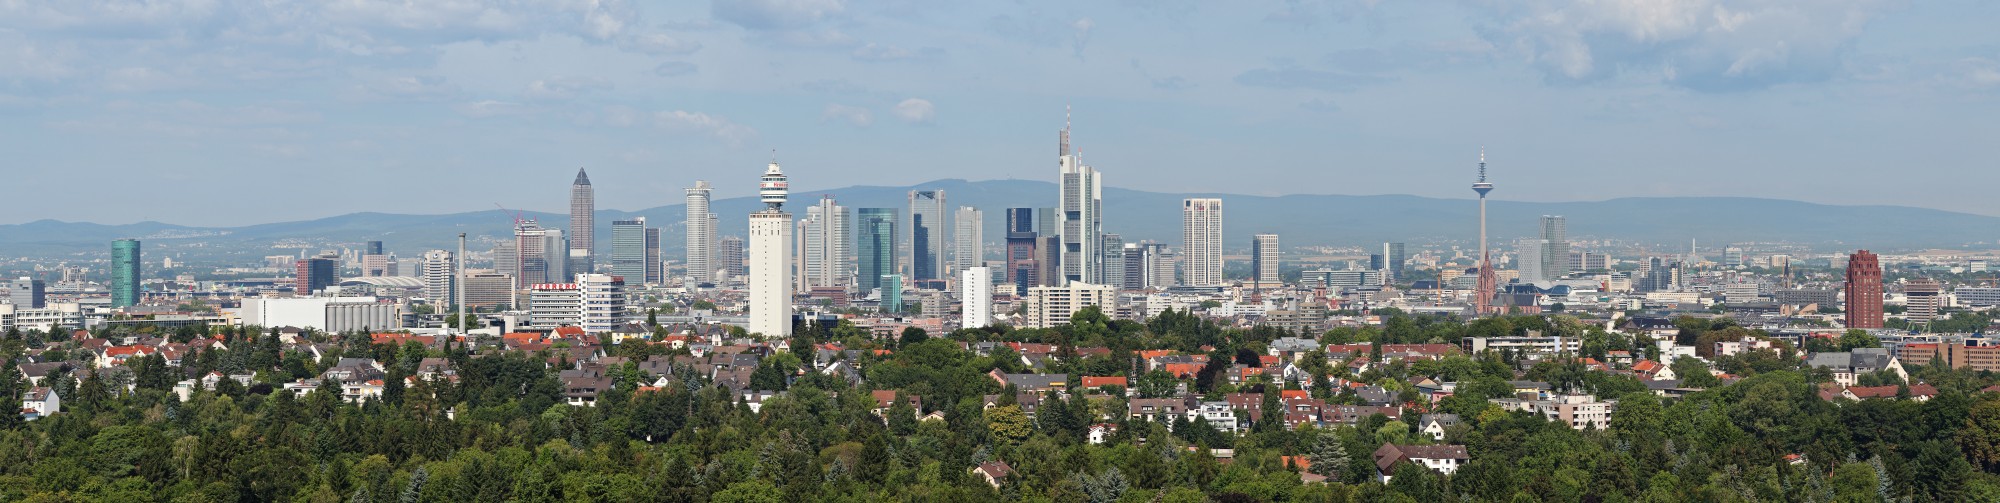 Cityscape Frankfurt 2010 panorama crop